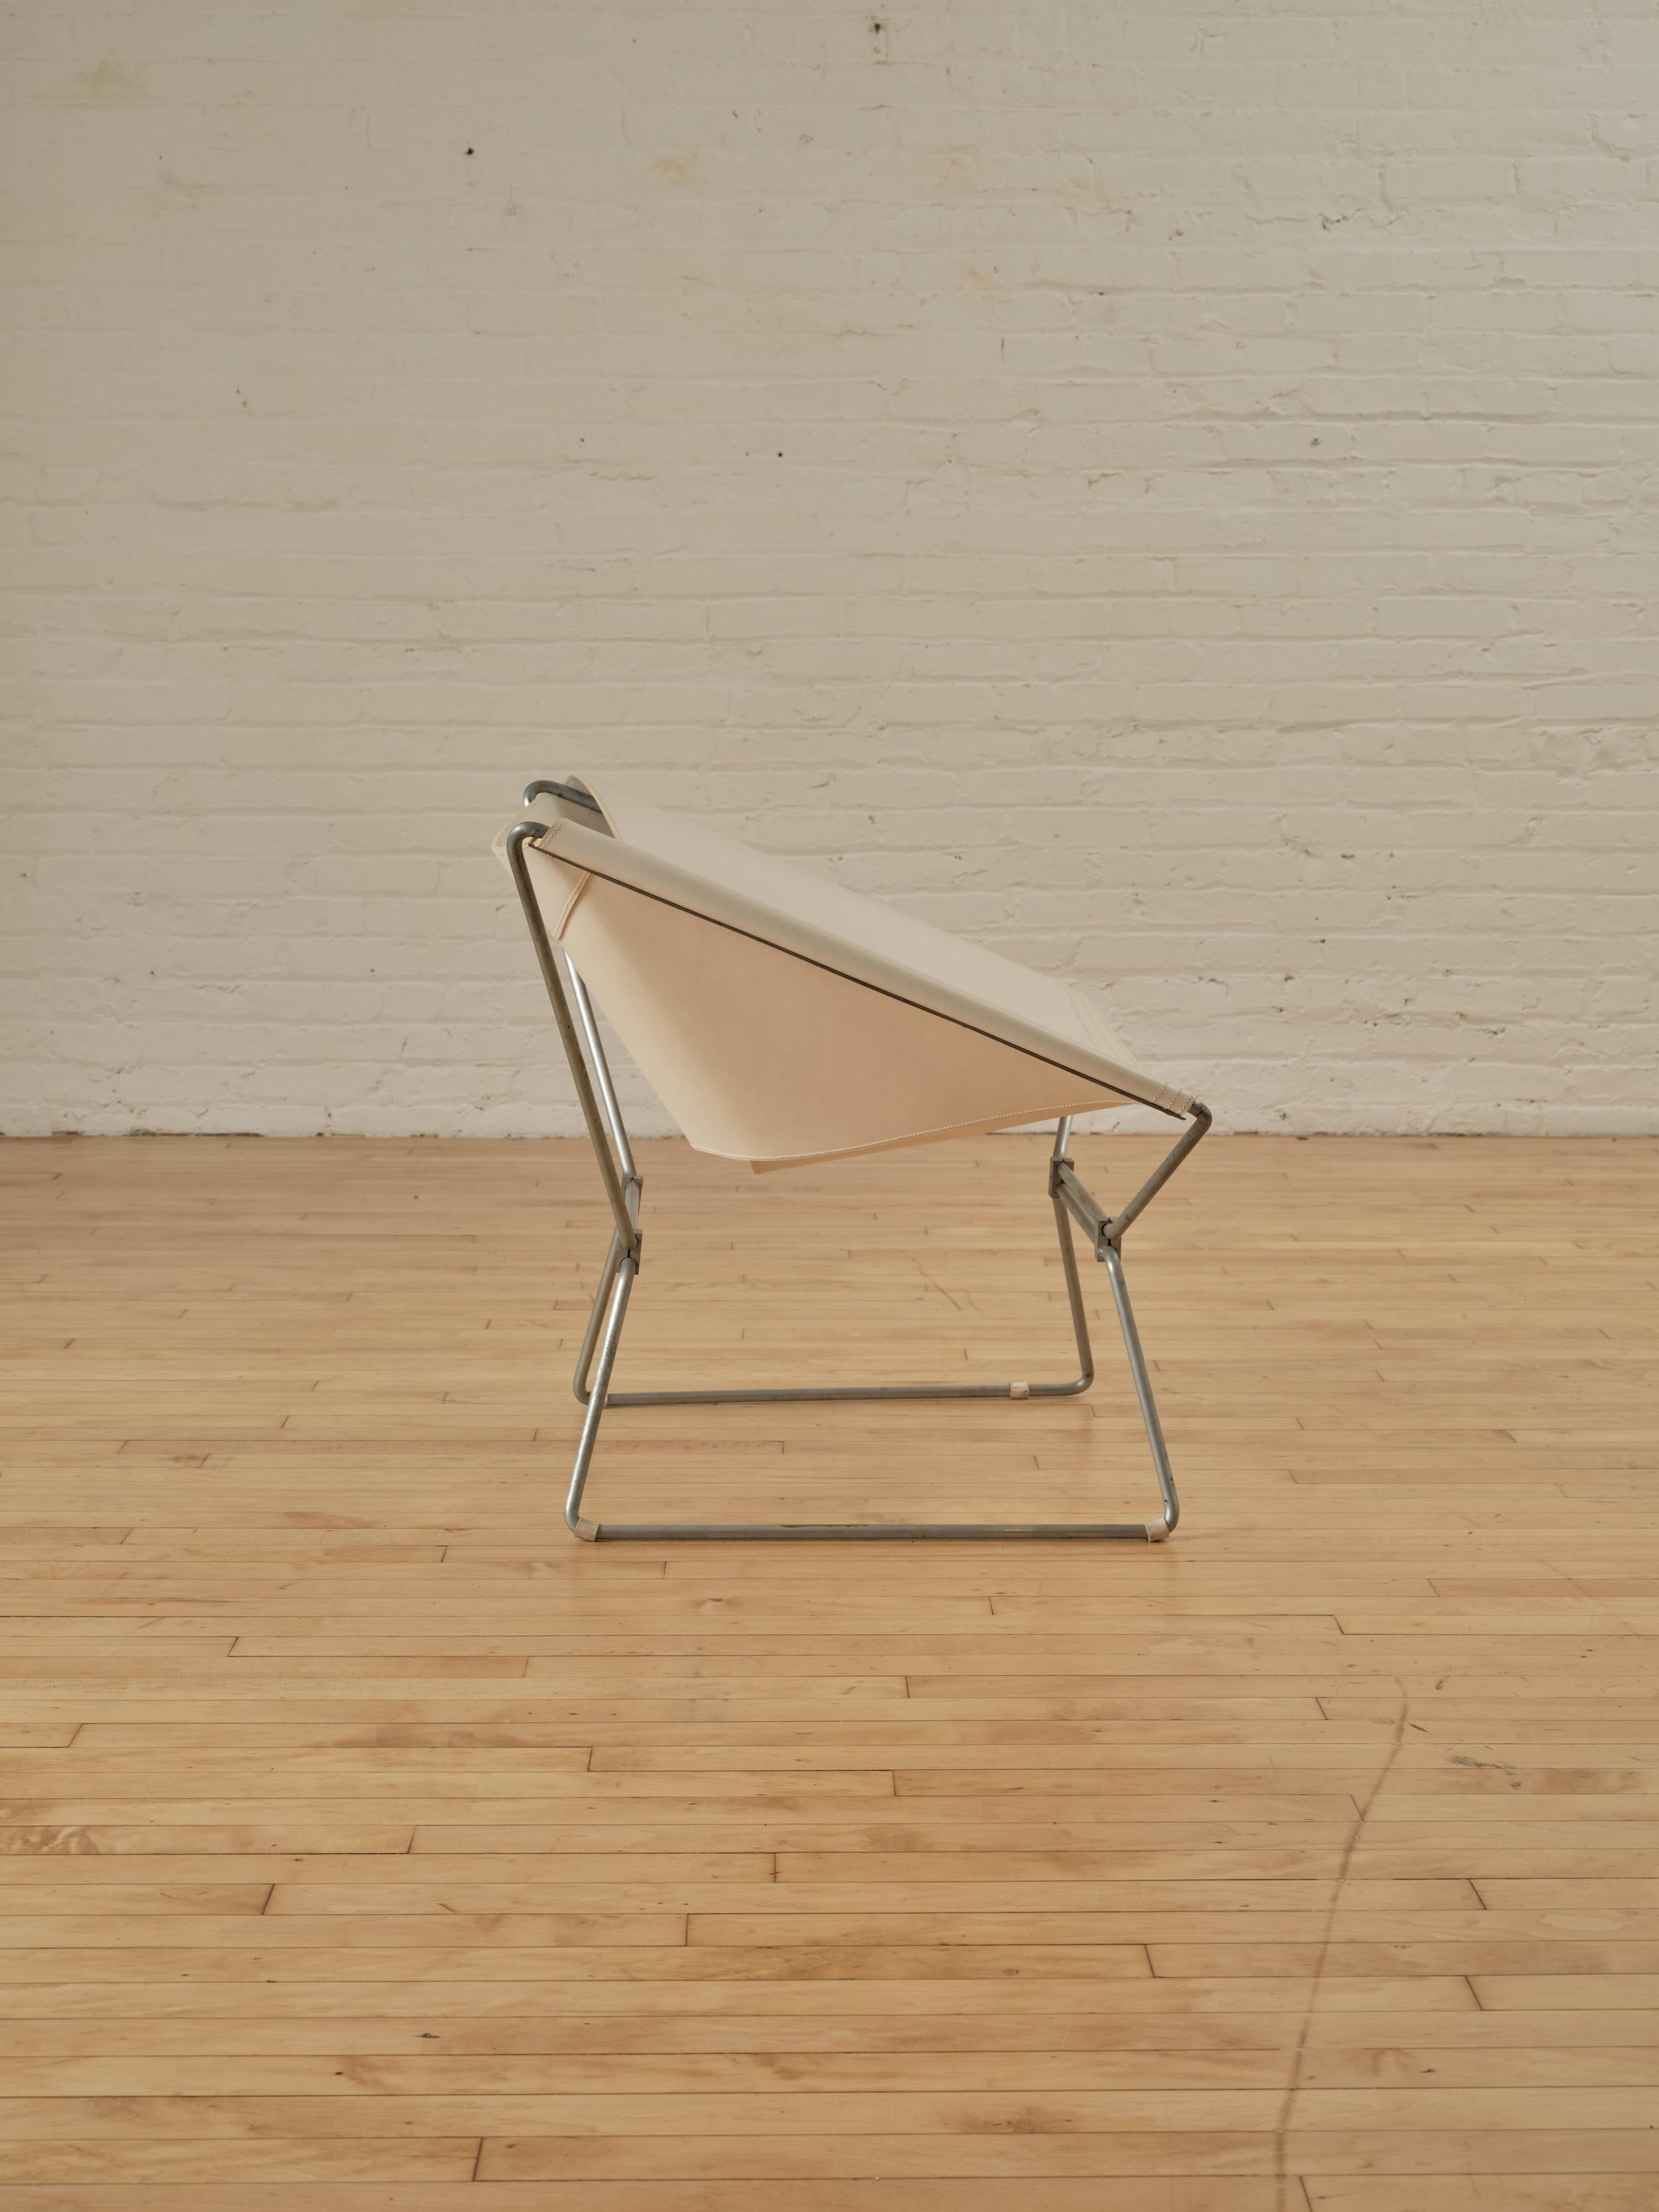 French Anneau Chair by Pierre Paulin for AP Polak (Model Ap-14) For Sale